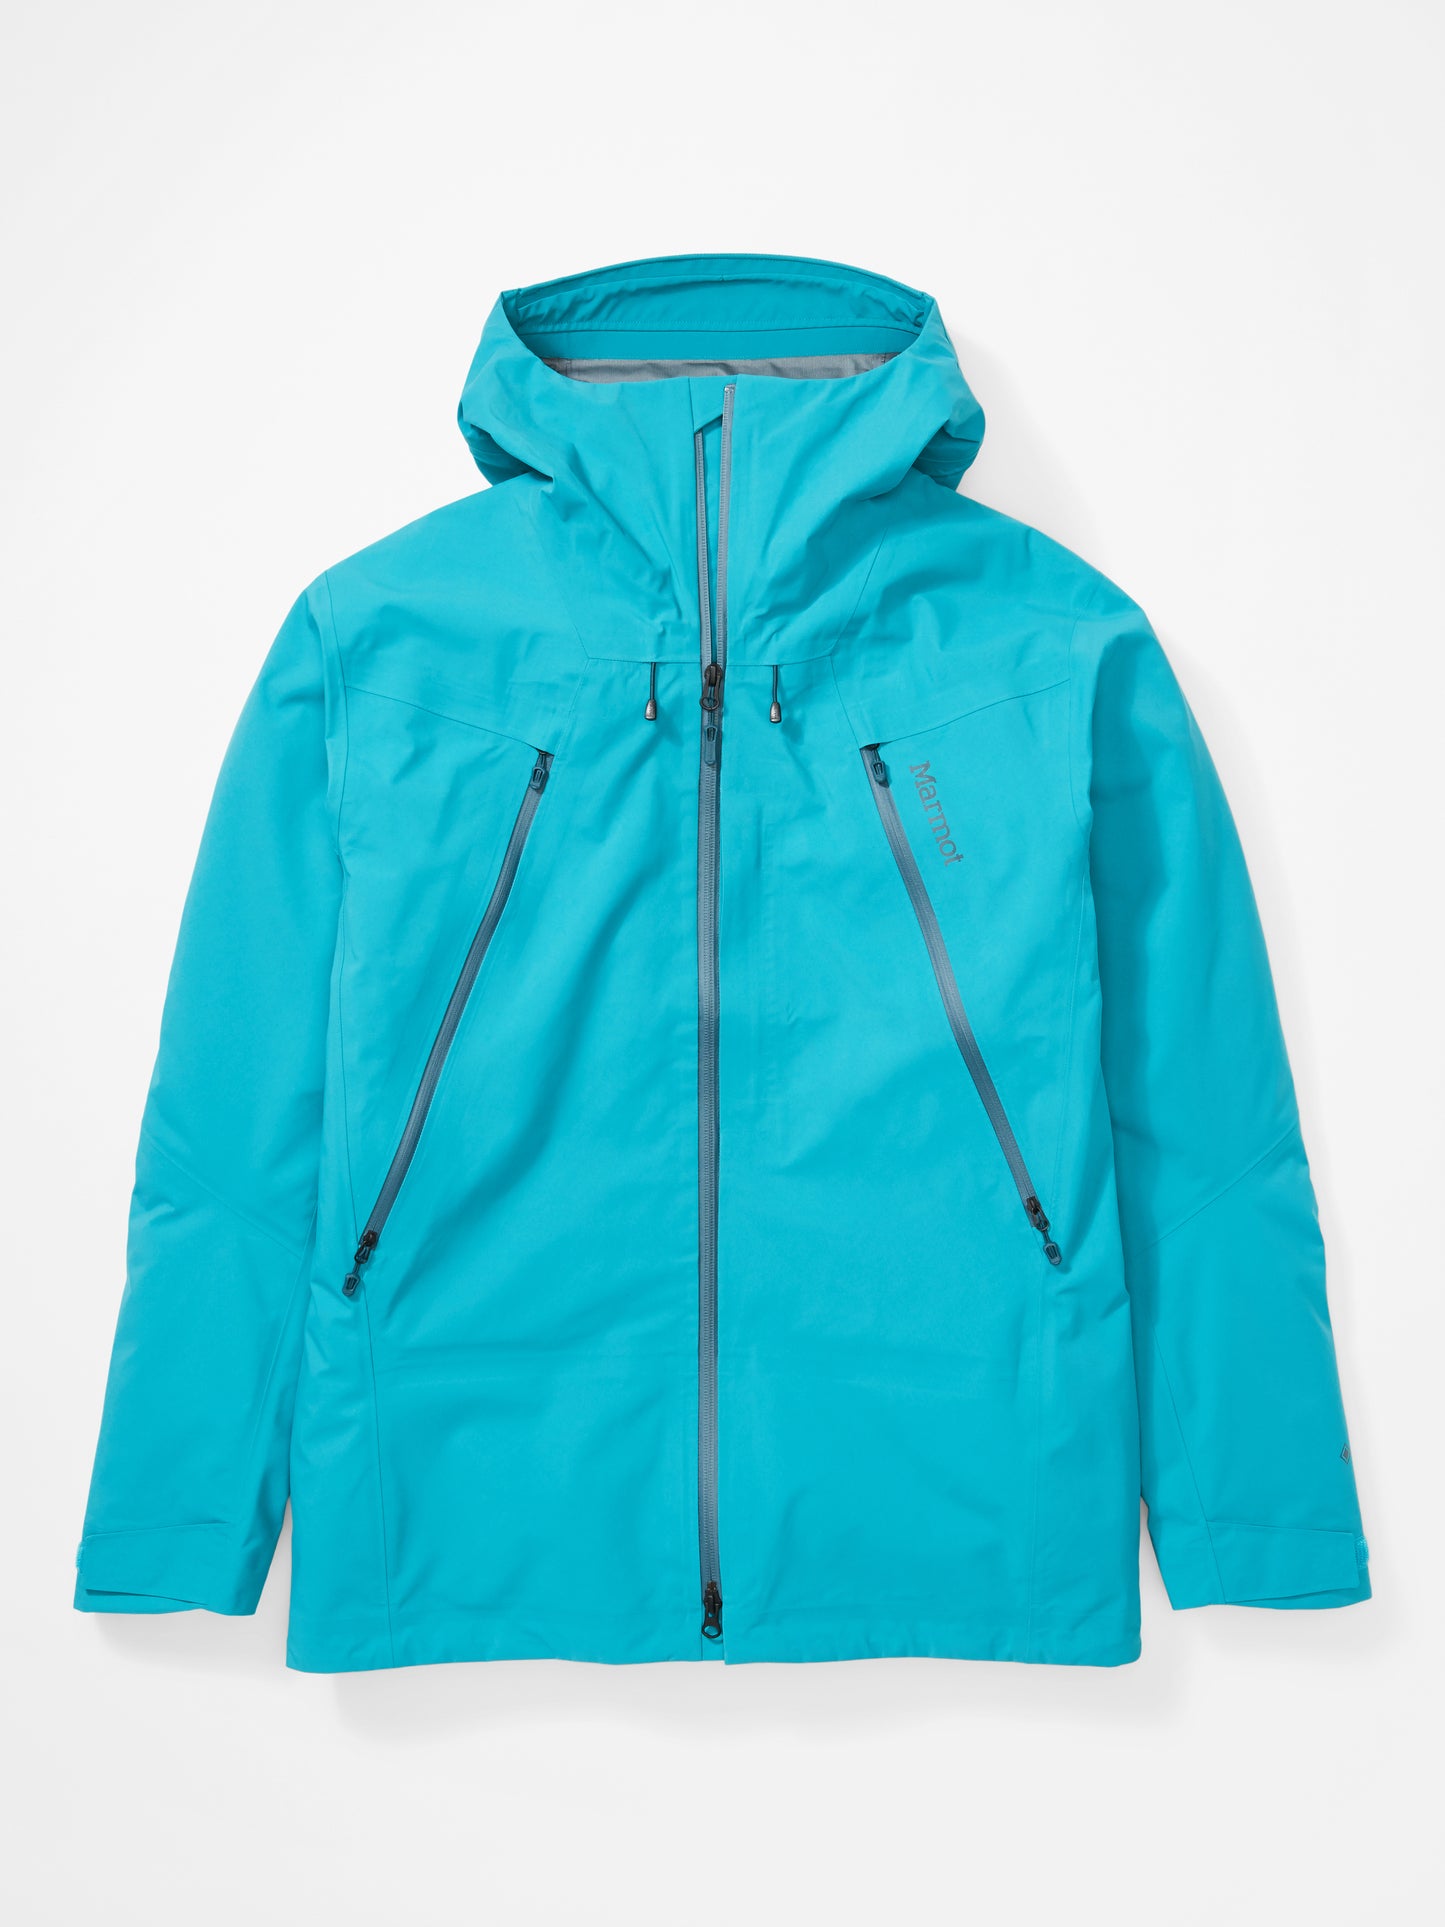 Men's Alpinist GORE-TEX® Pro Jacket by Marmot